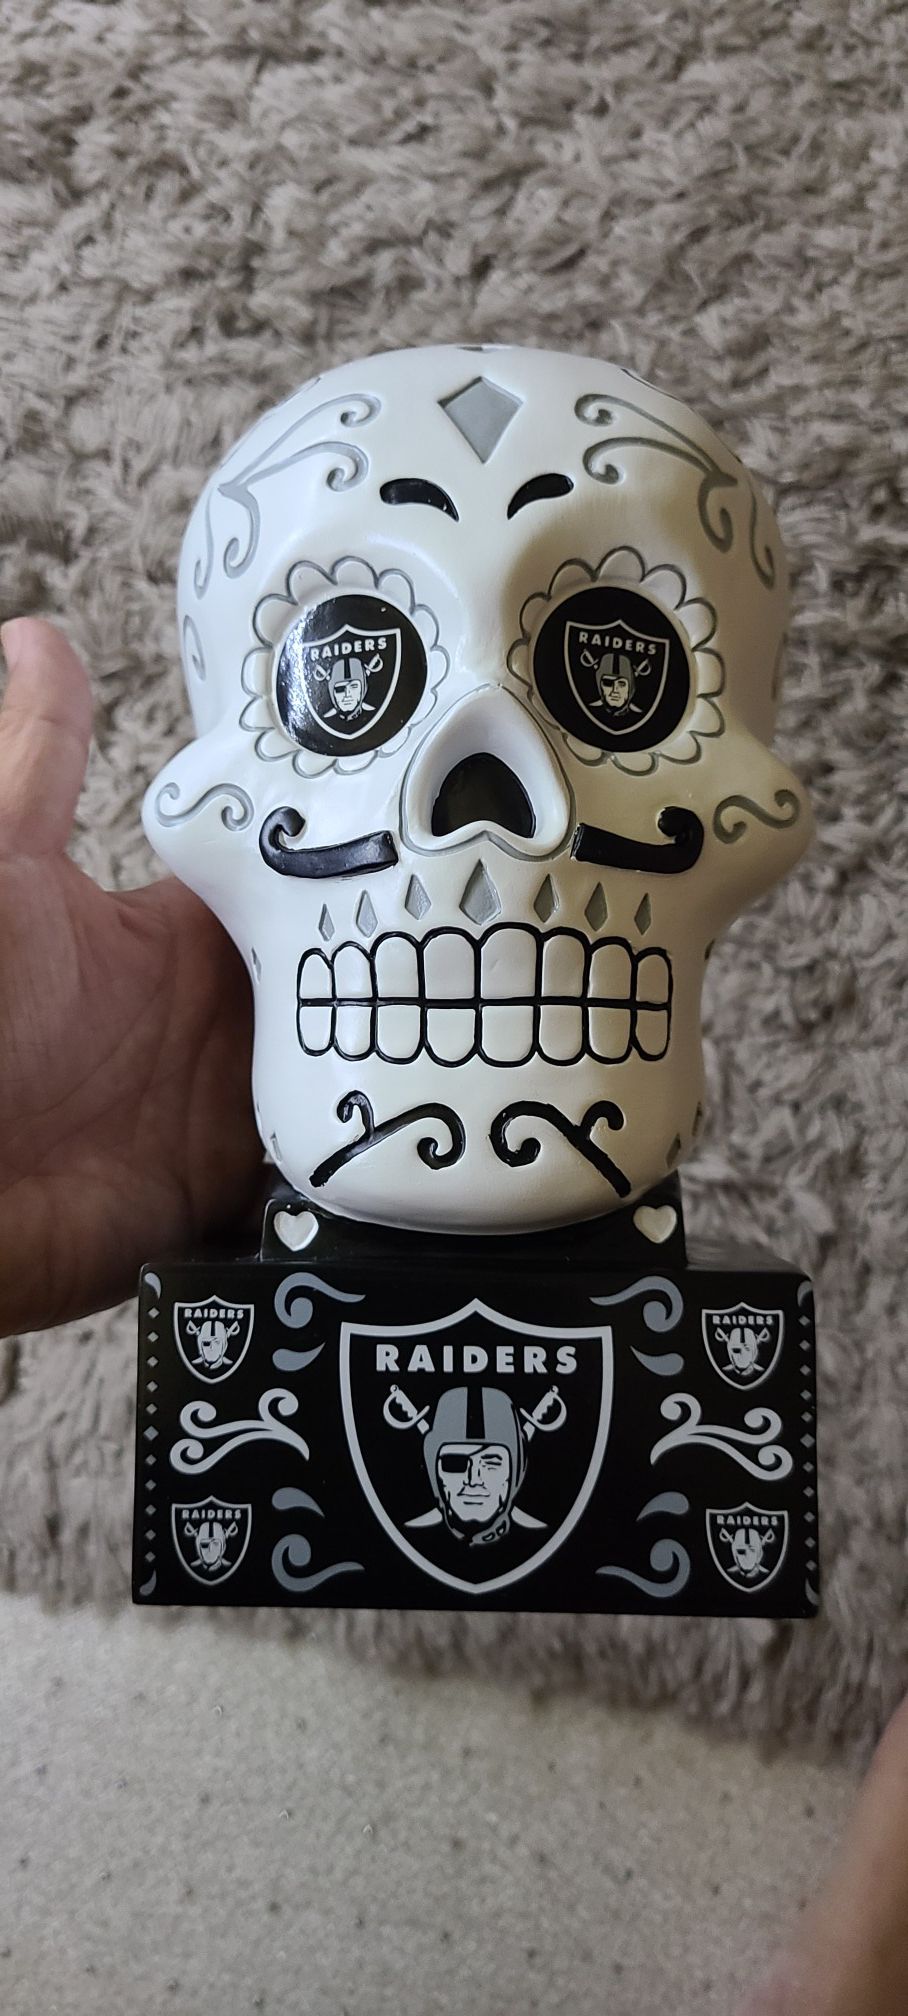 Las Vegas Raiders Sugar Skull Collectable statue.